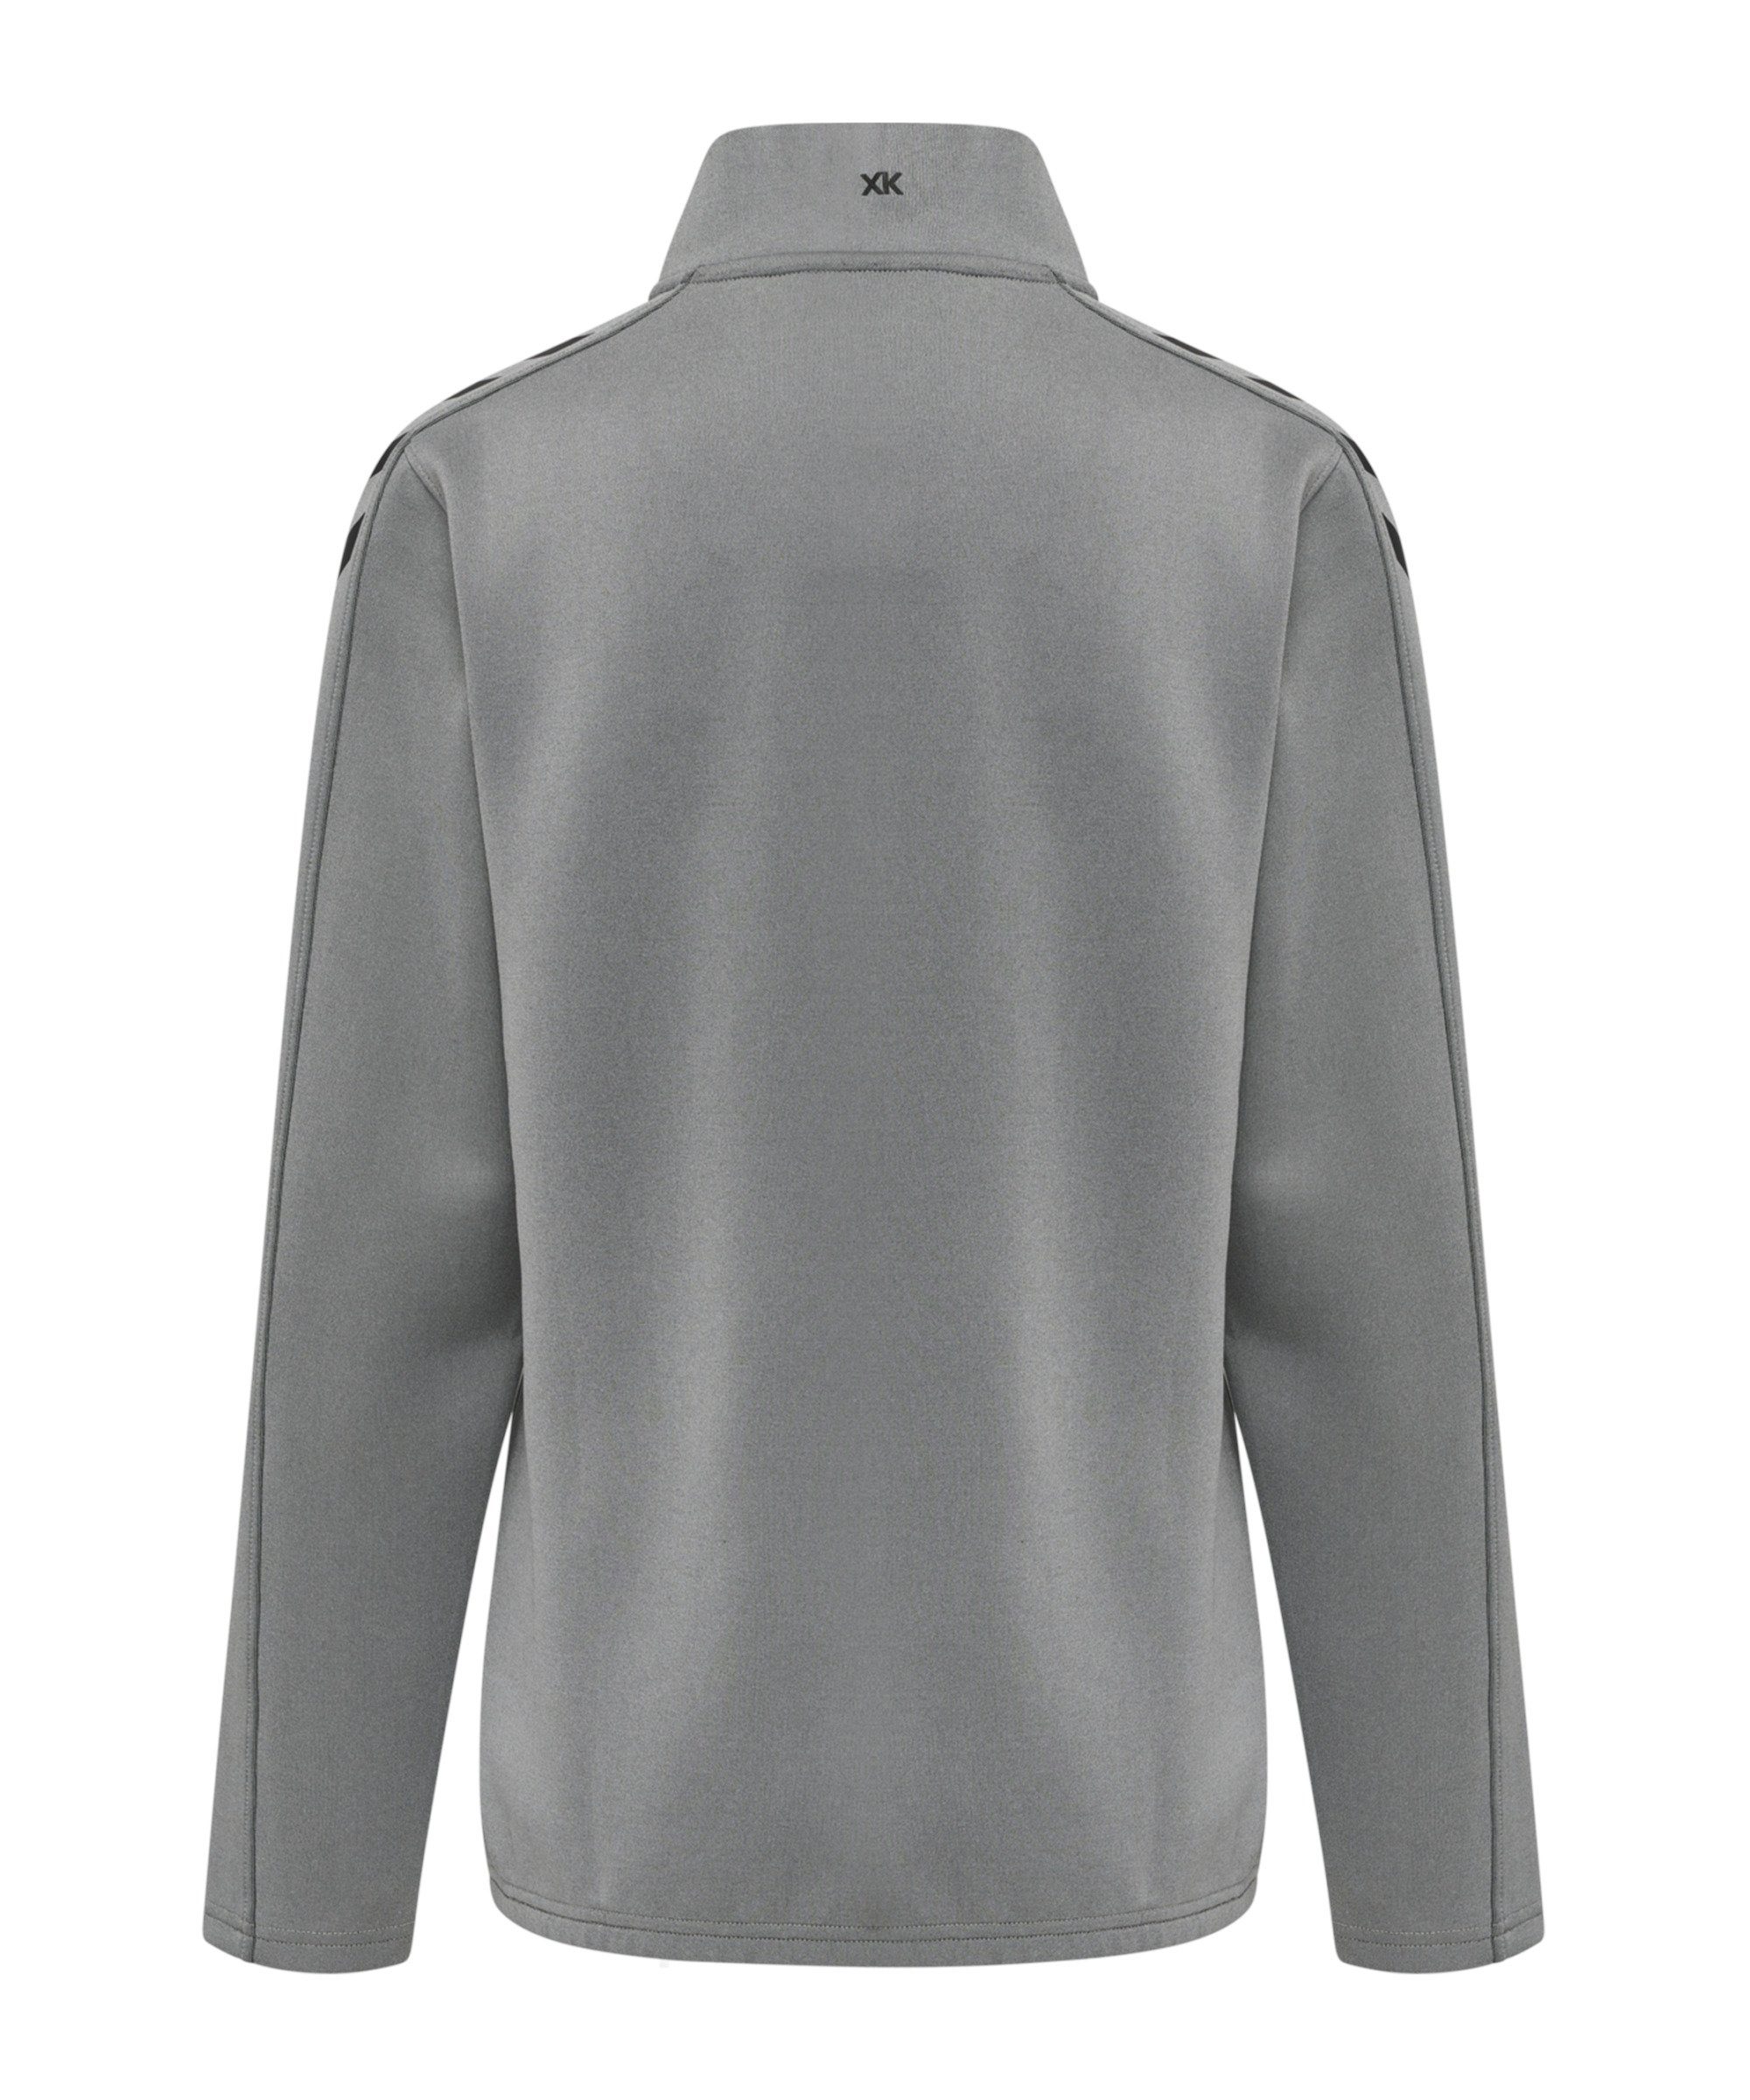 Sweatshirt grau hmlCORE XK HalfZip hummel Damen Sweater